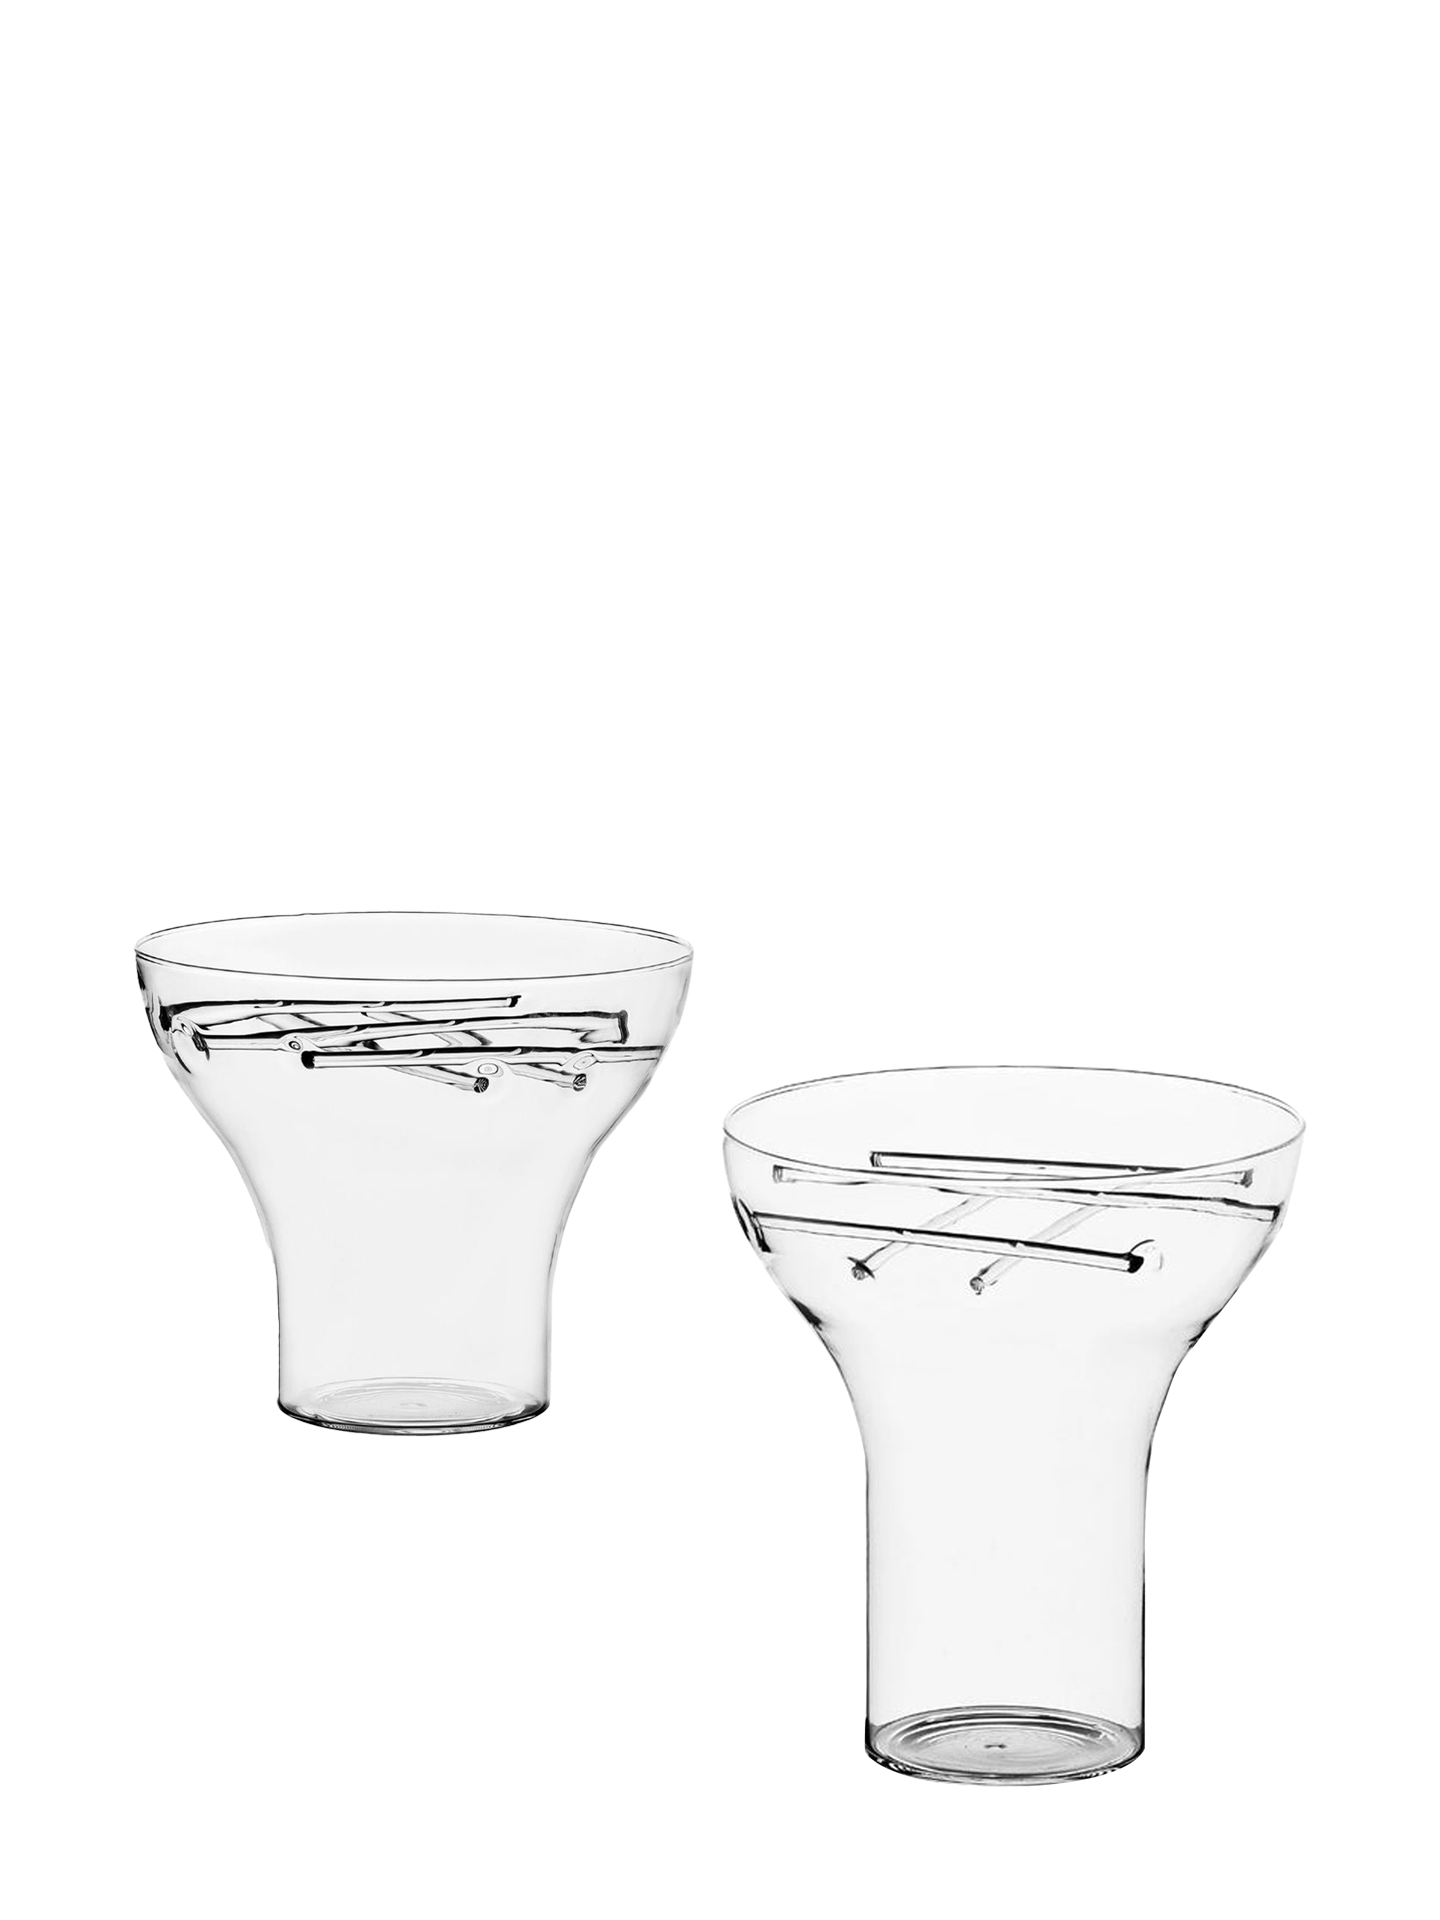 Trame Vase, Small or Medium